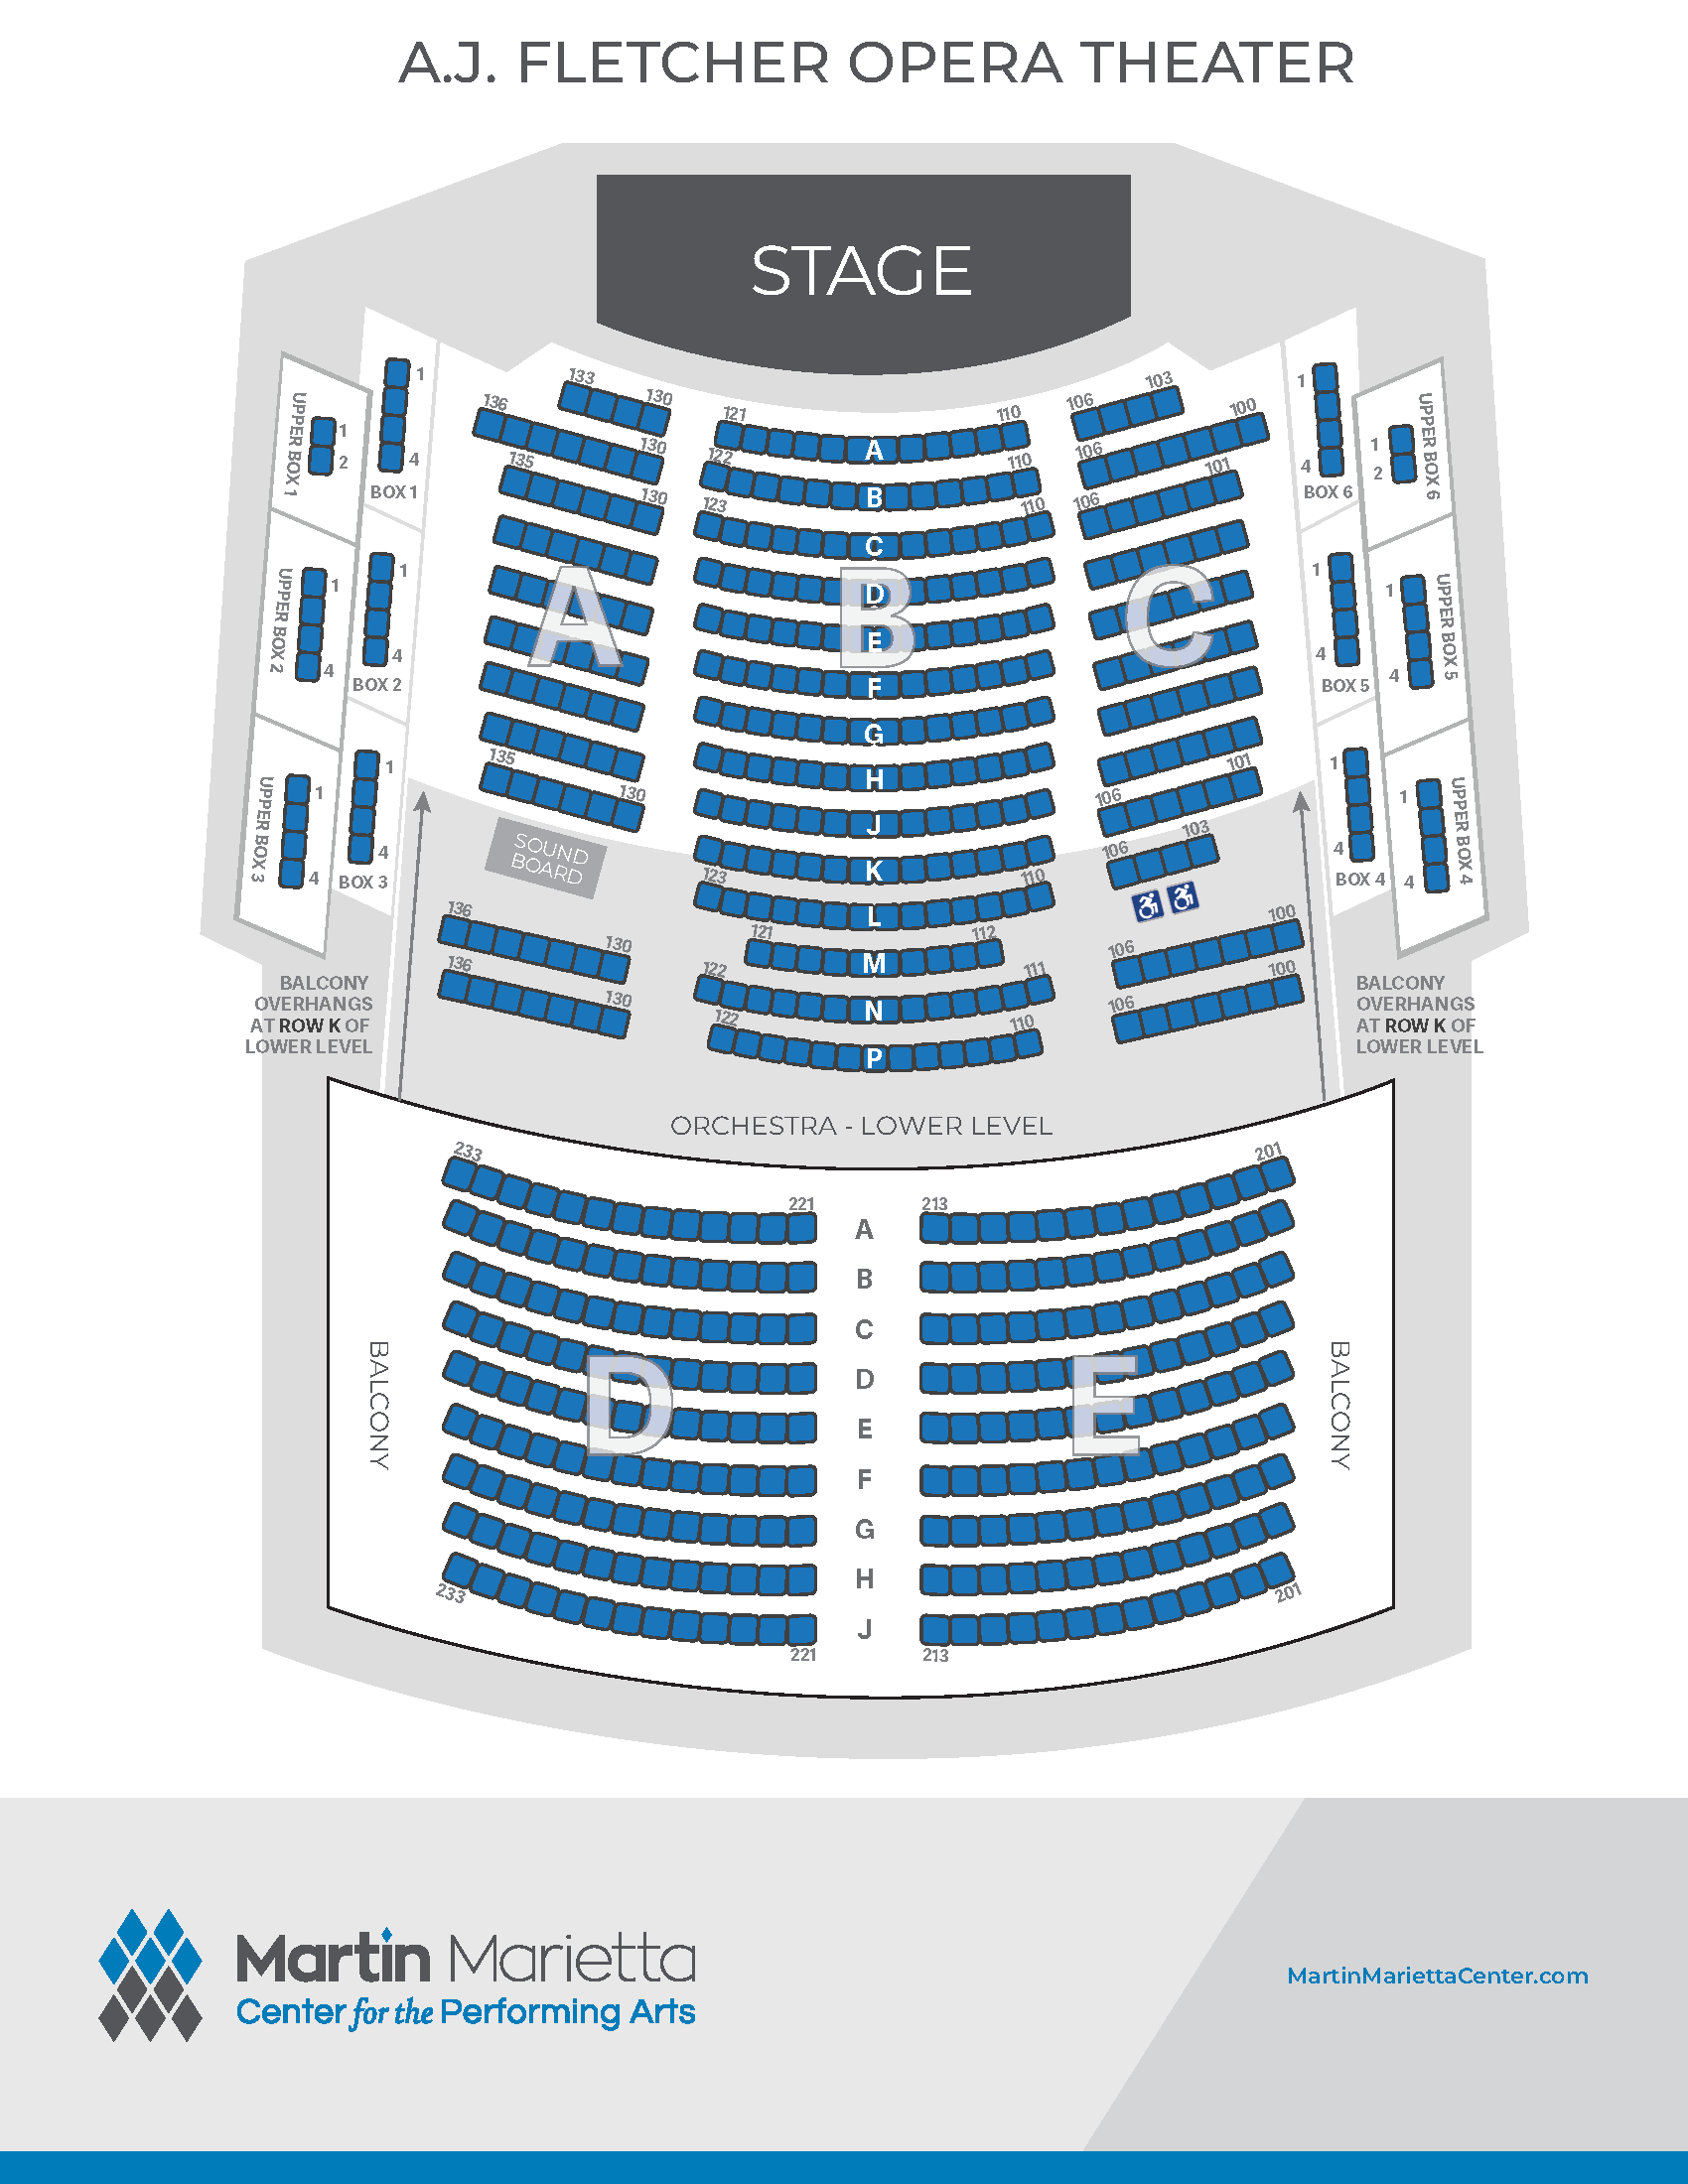 A.J. Fletcher Opera Theater seating chart